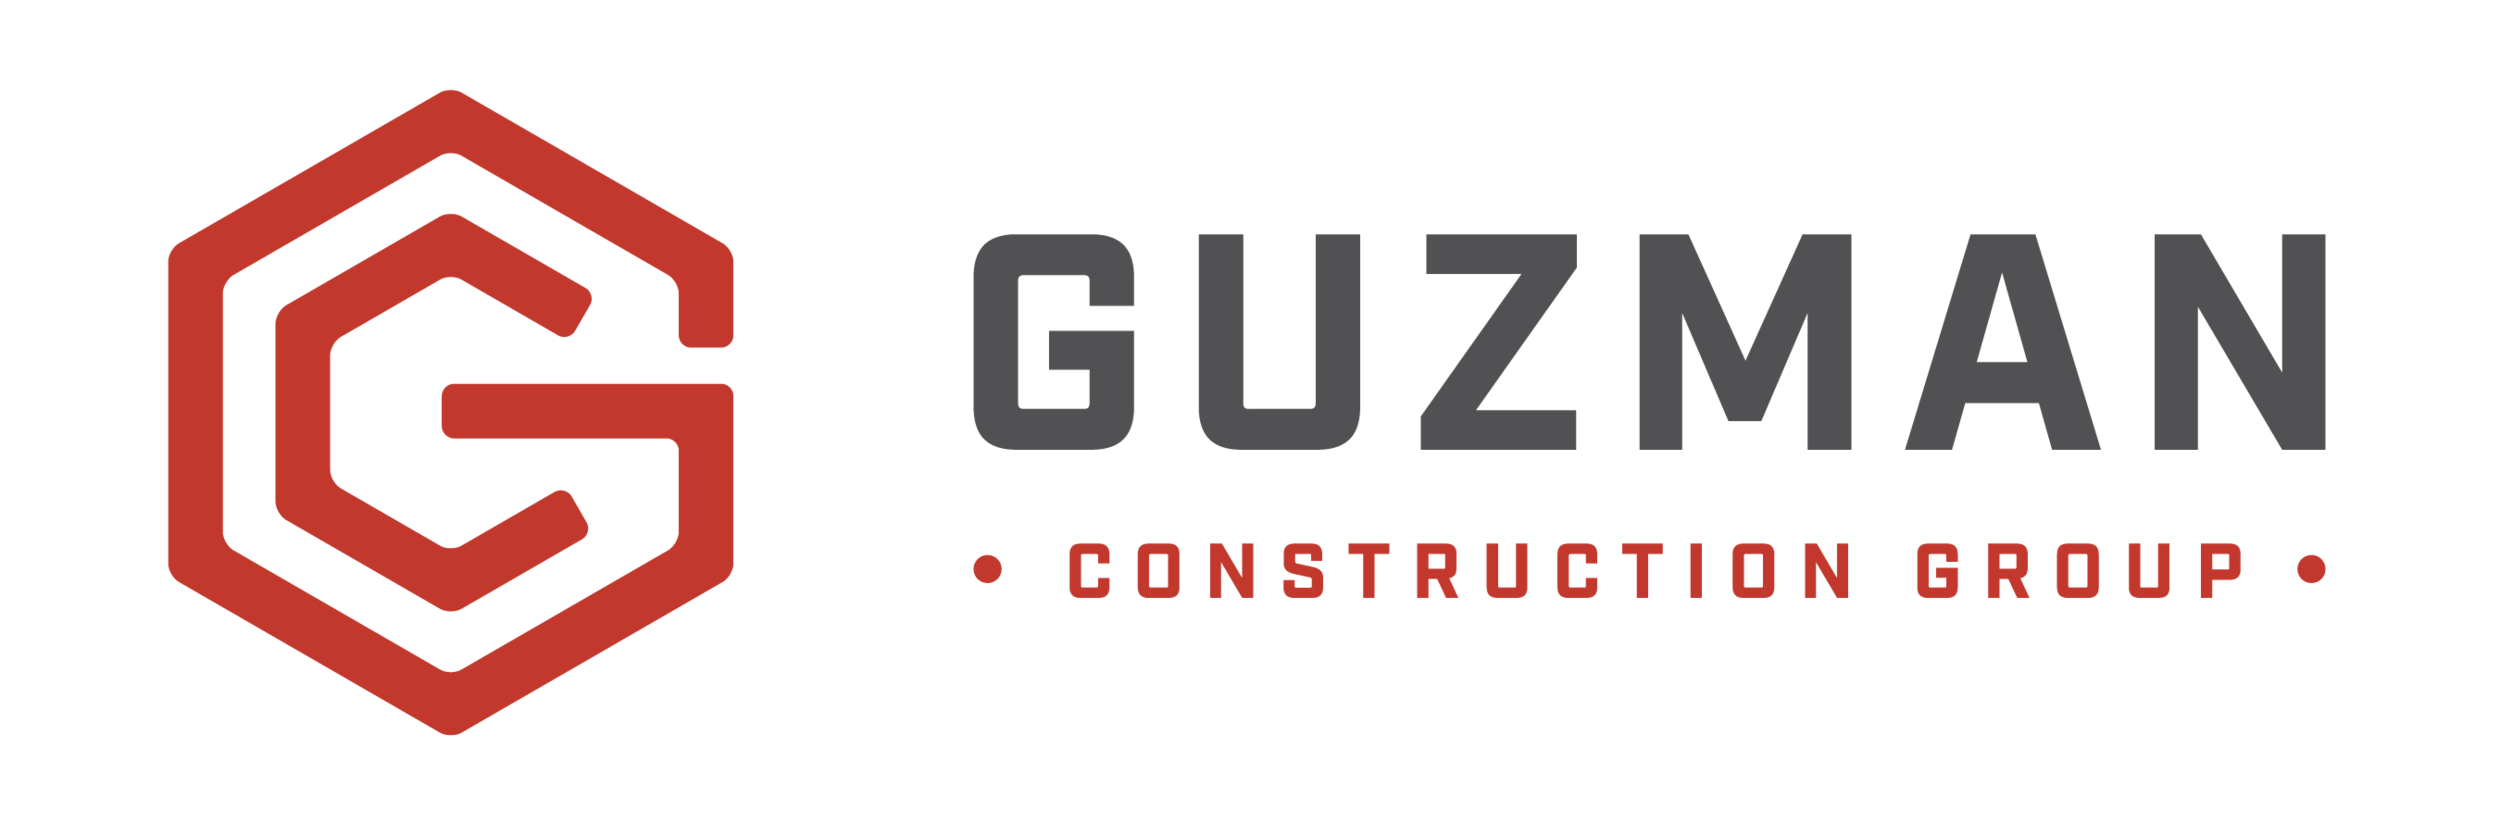 Guzman Construction Group